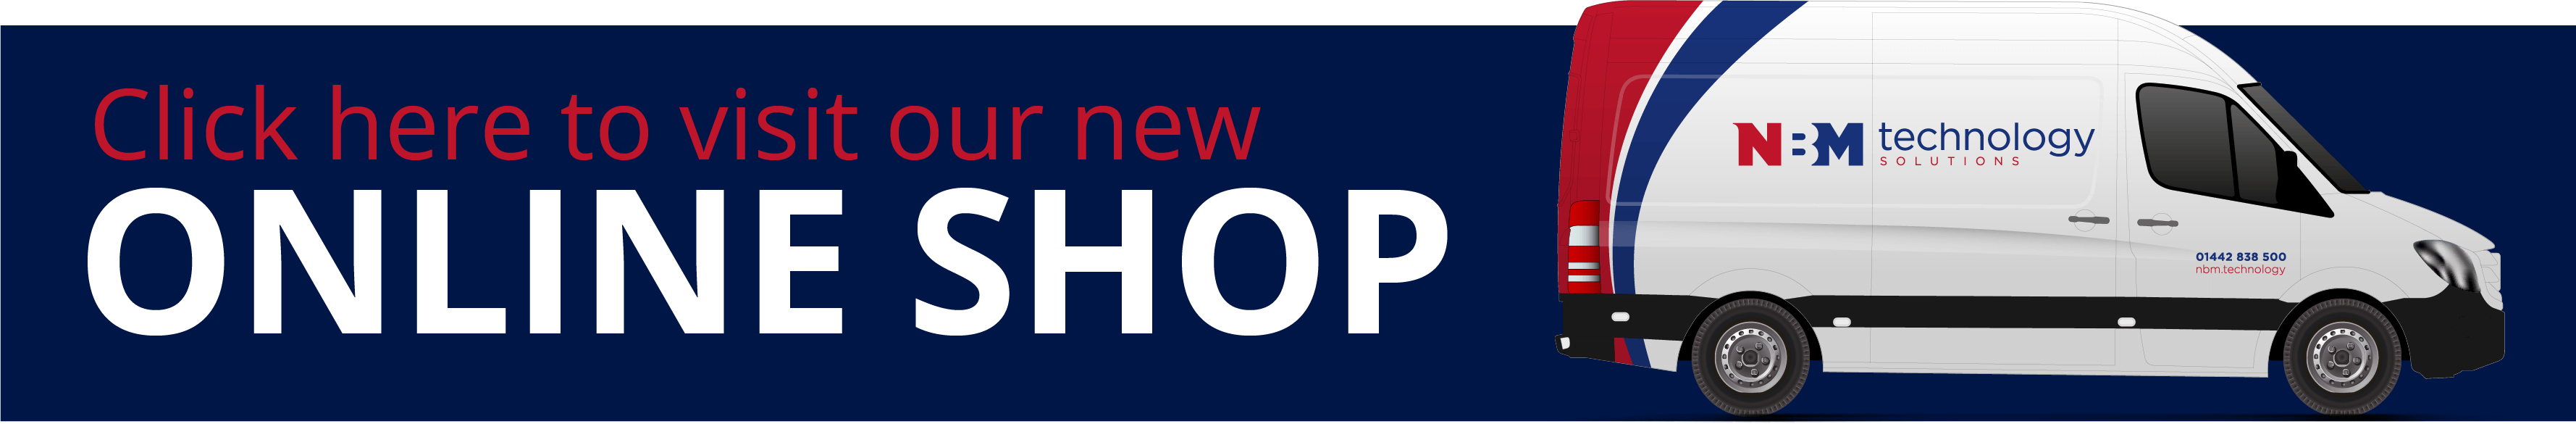 New Online Shop